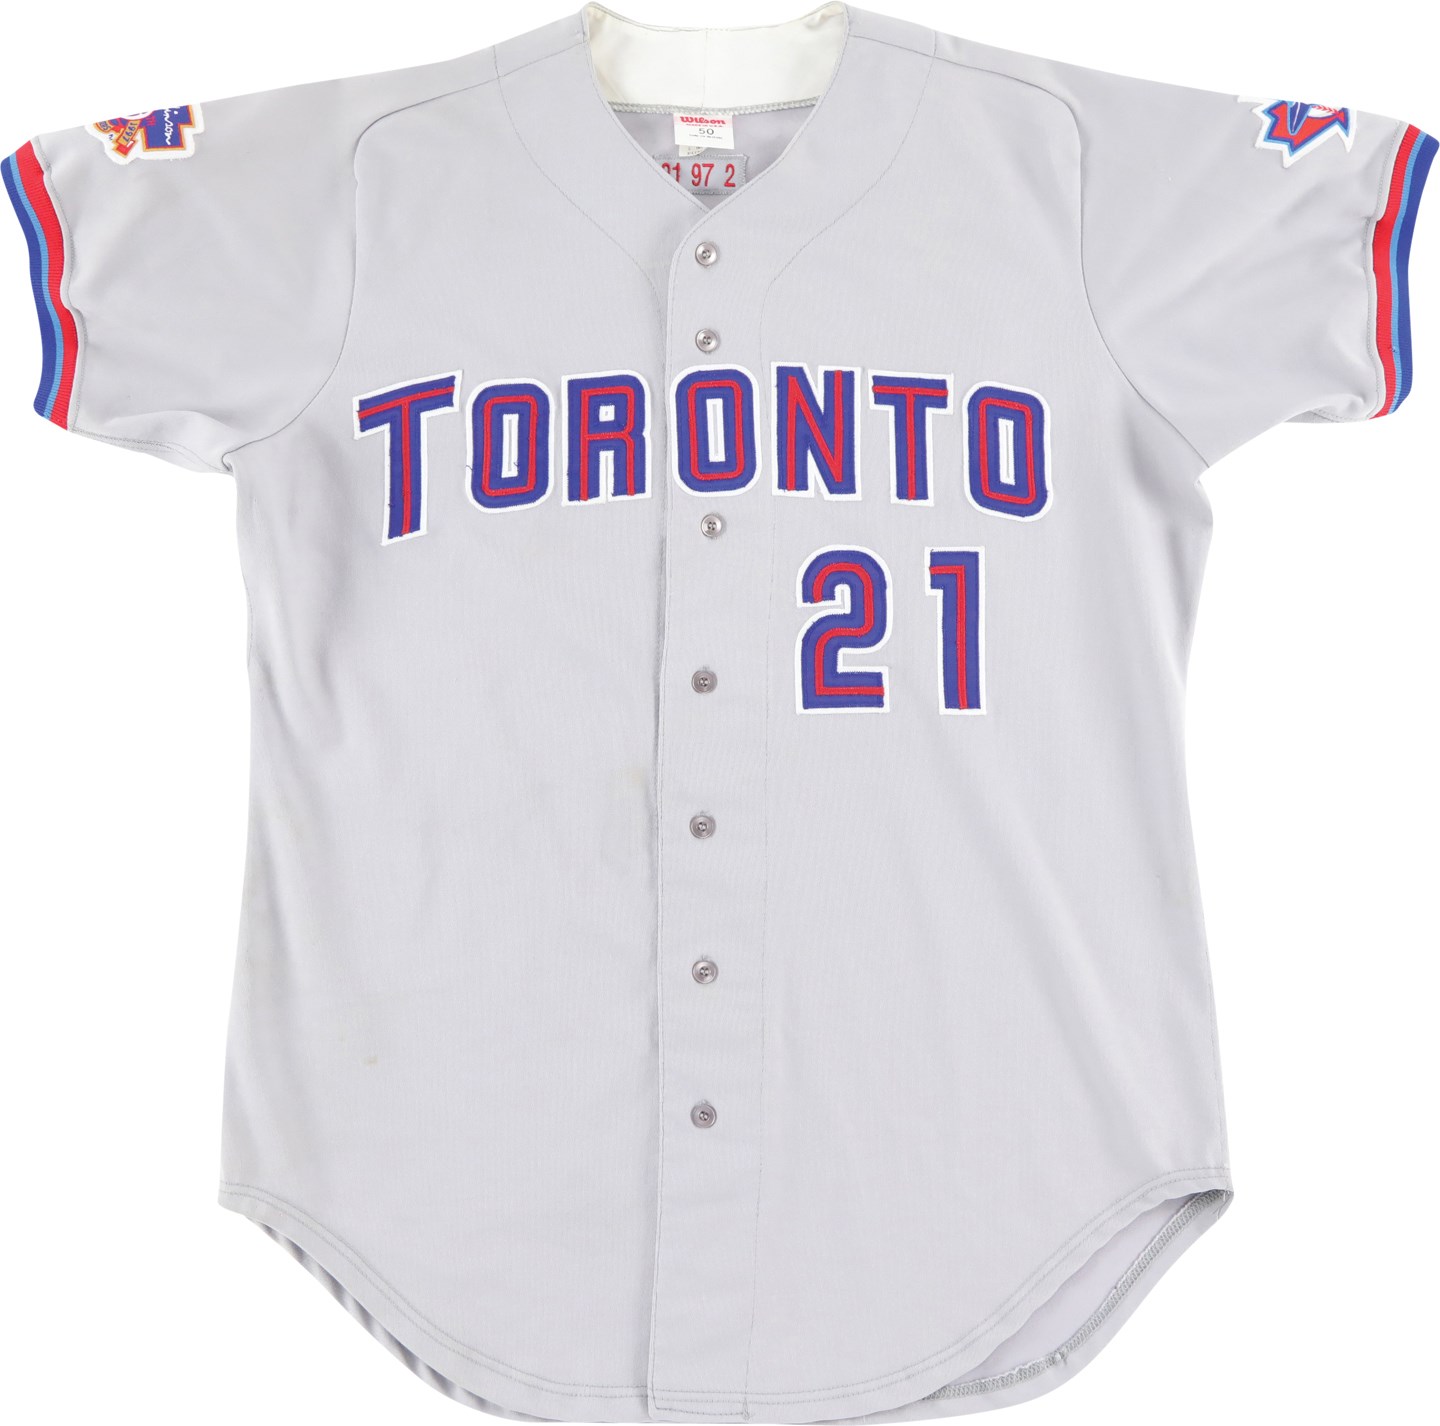 Baseball Equipment - 1997 Roger Clemens Toronto Blue Jays Signed Game Worn Jersey - Triple Crown Season (PSA)